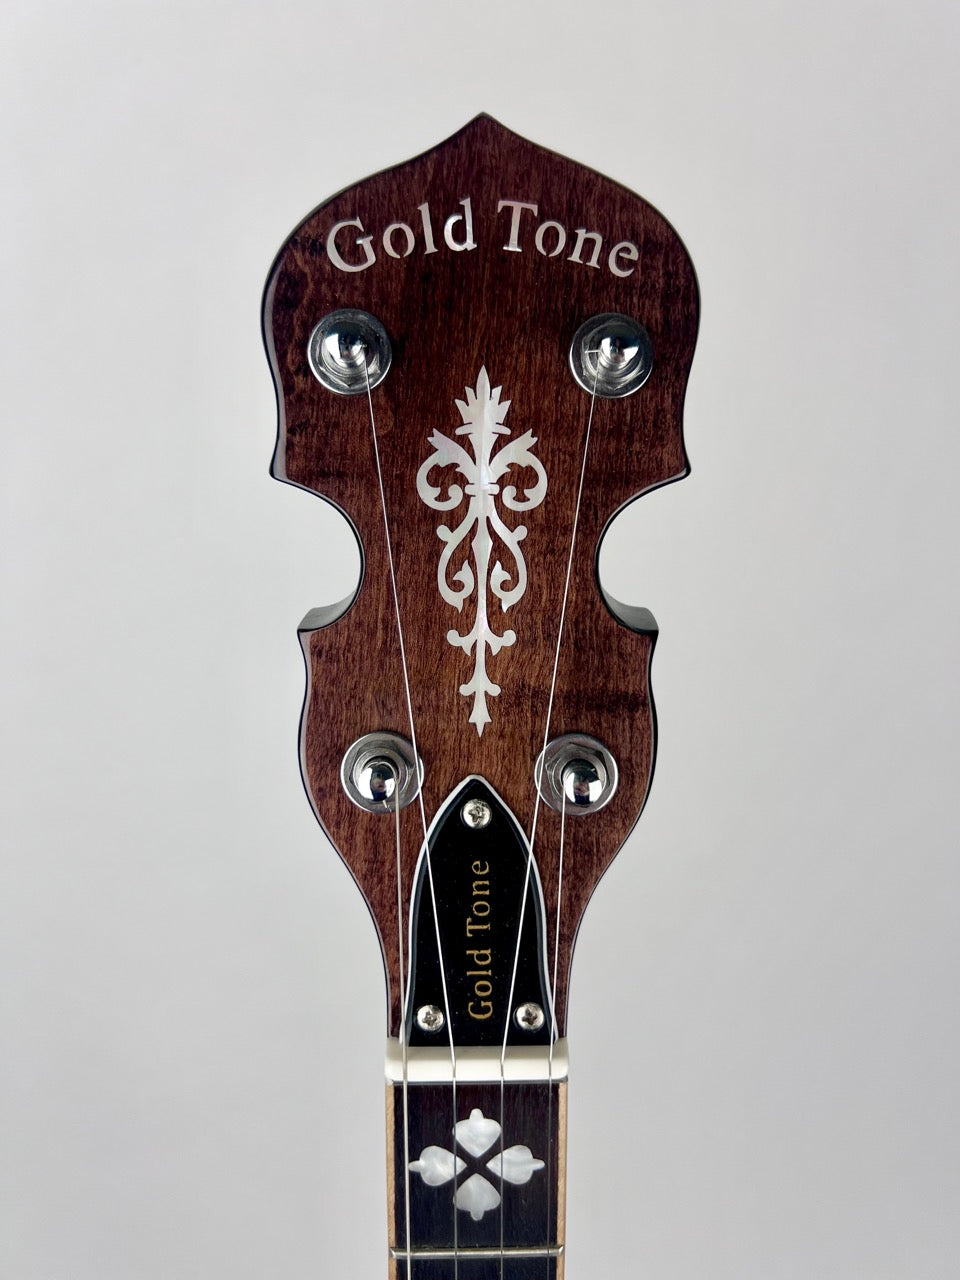 Gold Tone OB-250